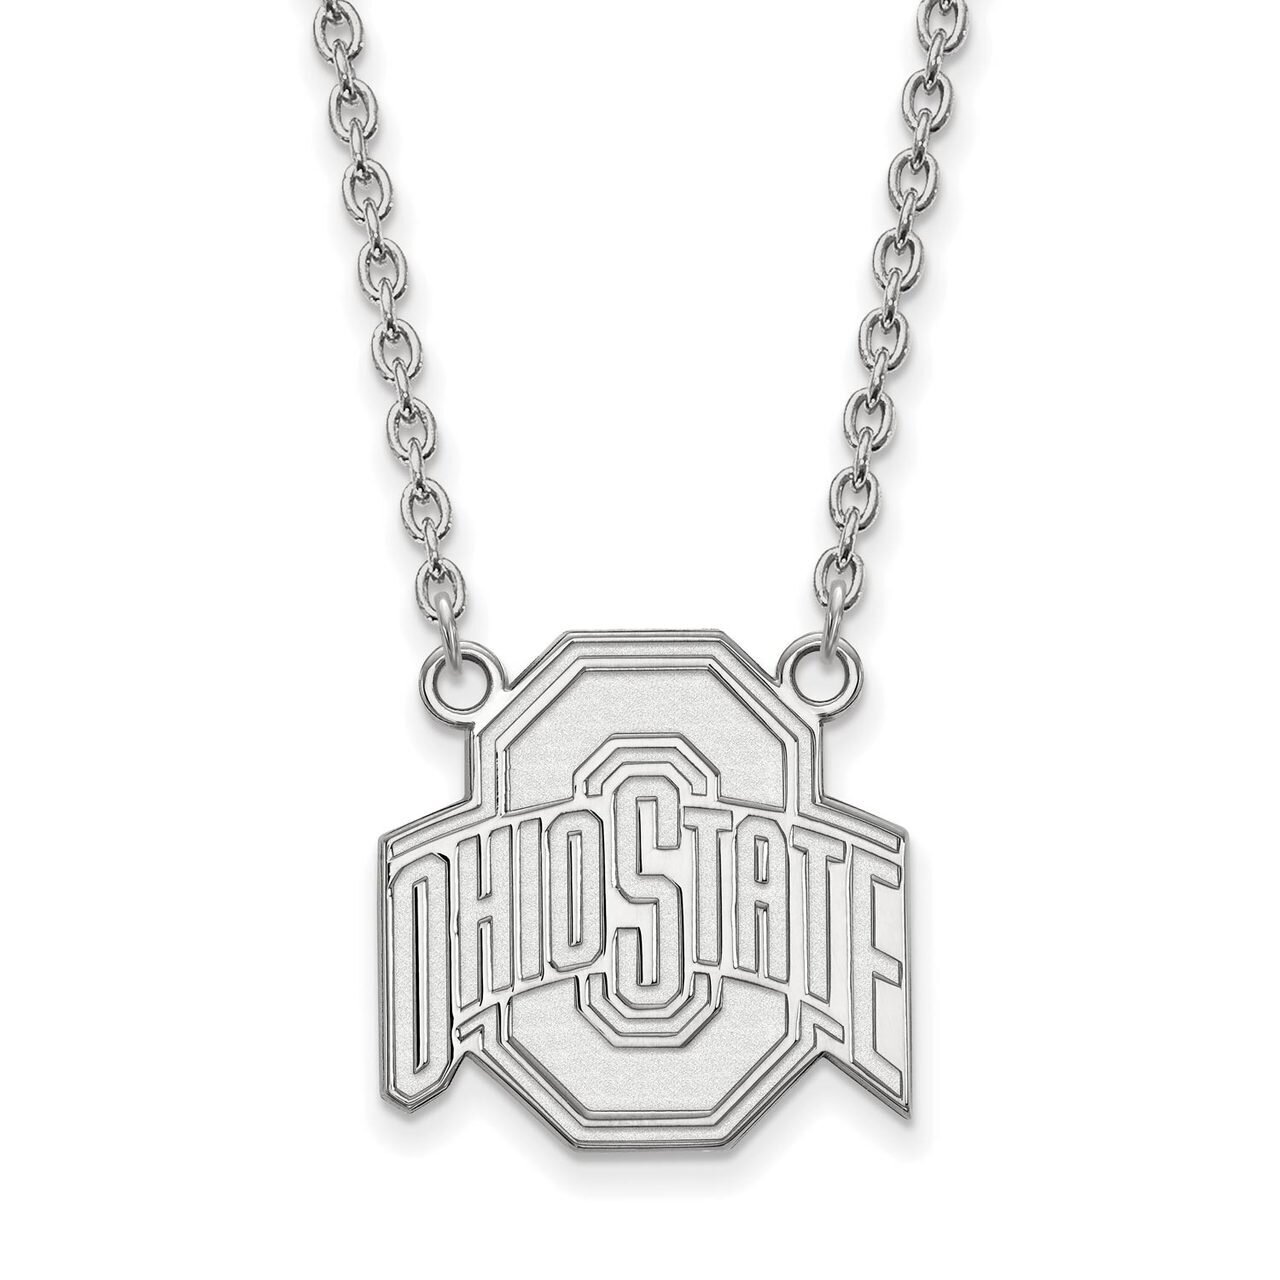 Ohio State University Large Pendant with Chain Necklace 14k White Gold 4W016OSU-18